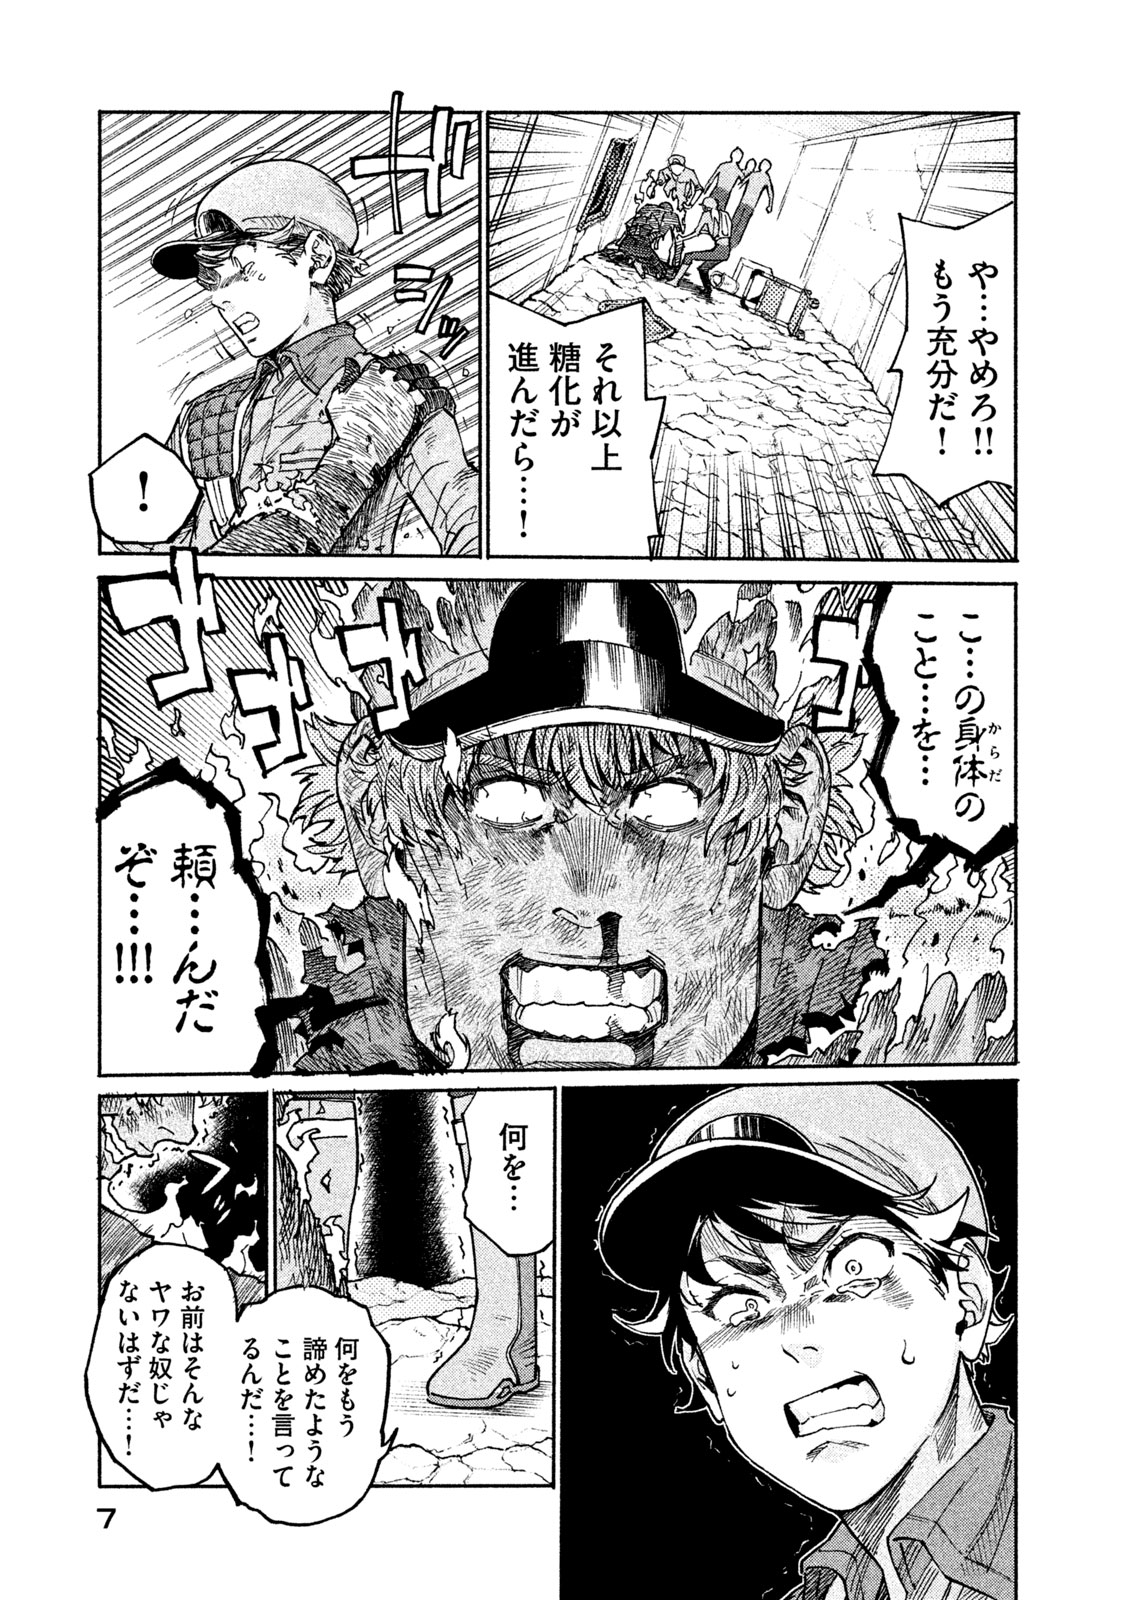 Hataraku Saibou BLACK - Chapter 25 - Page 9